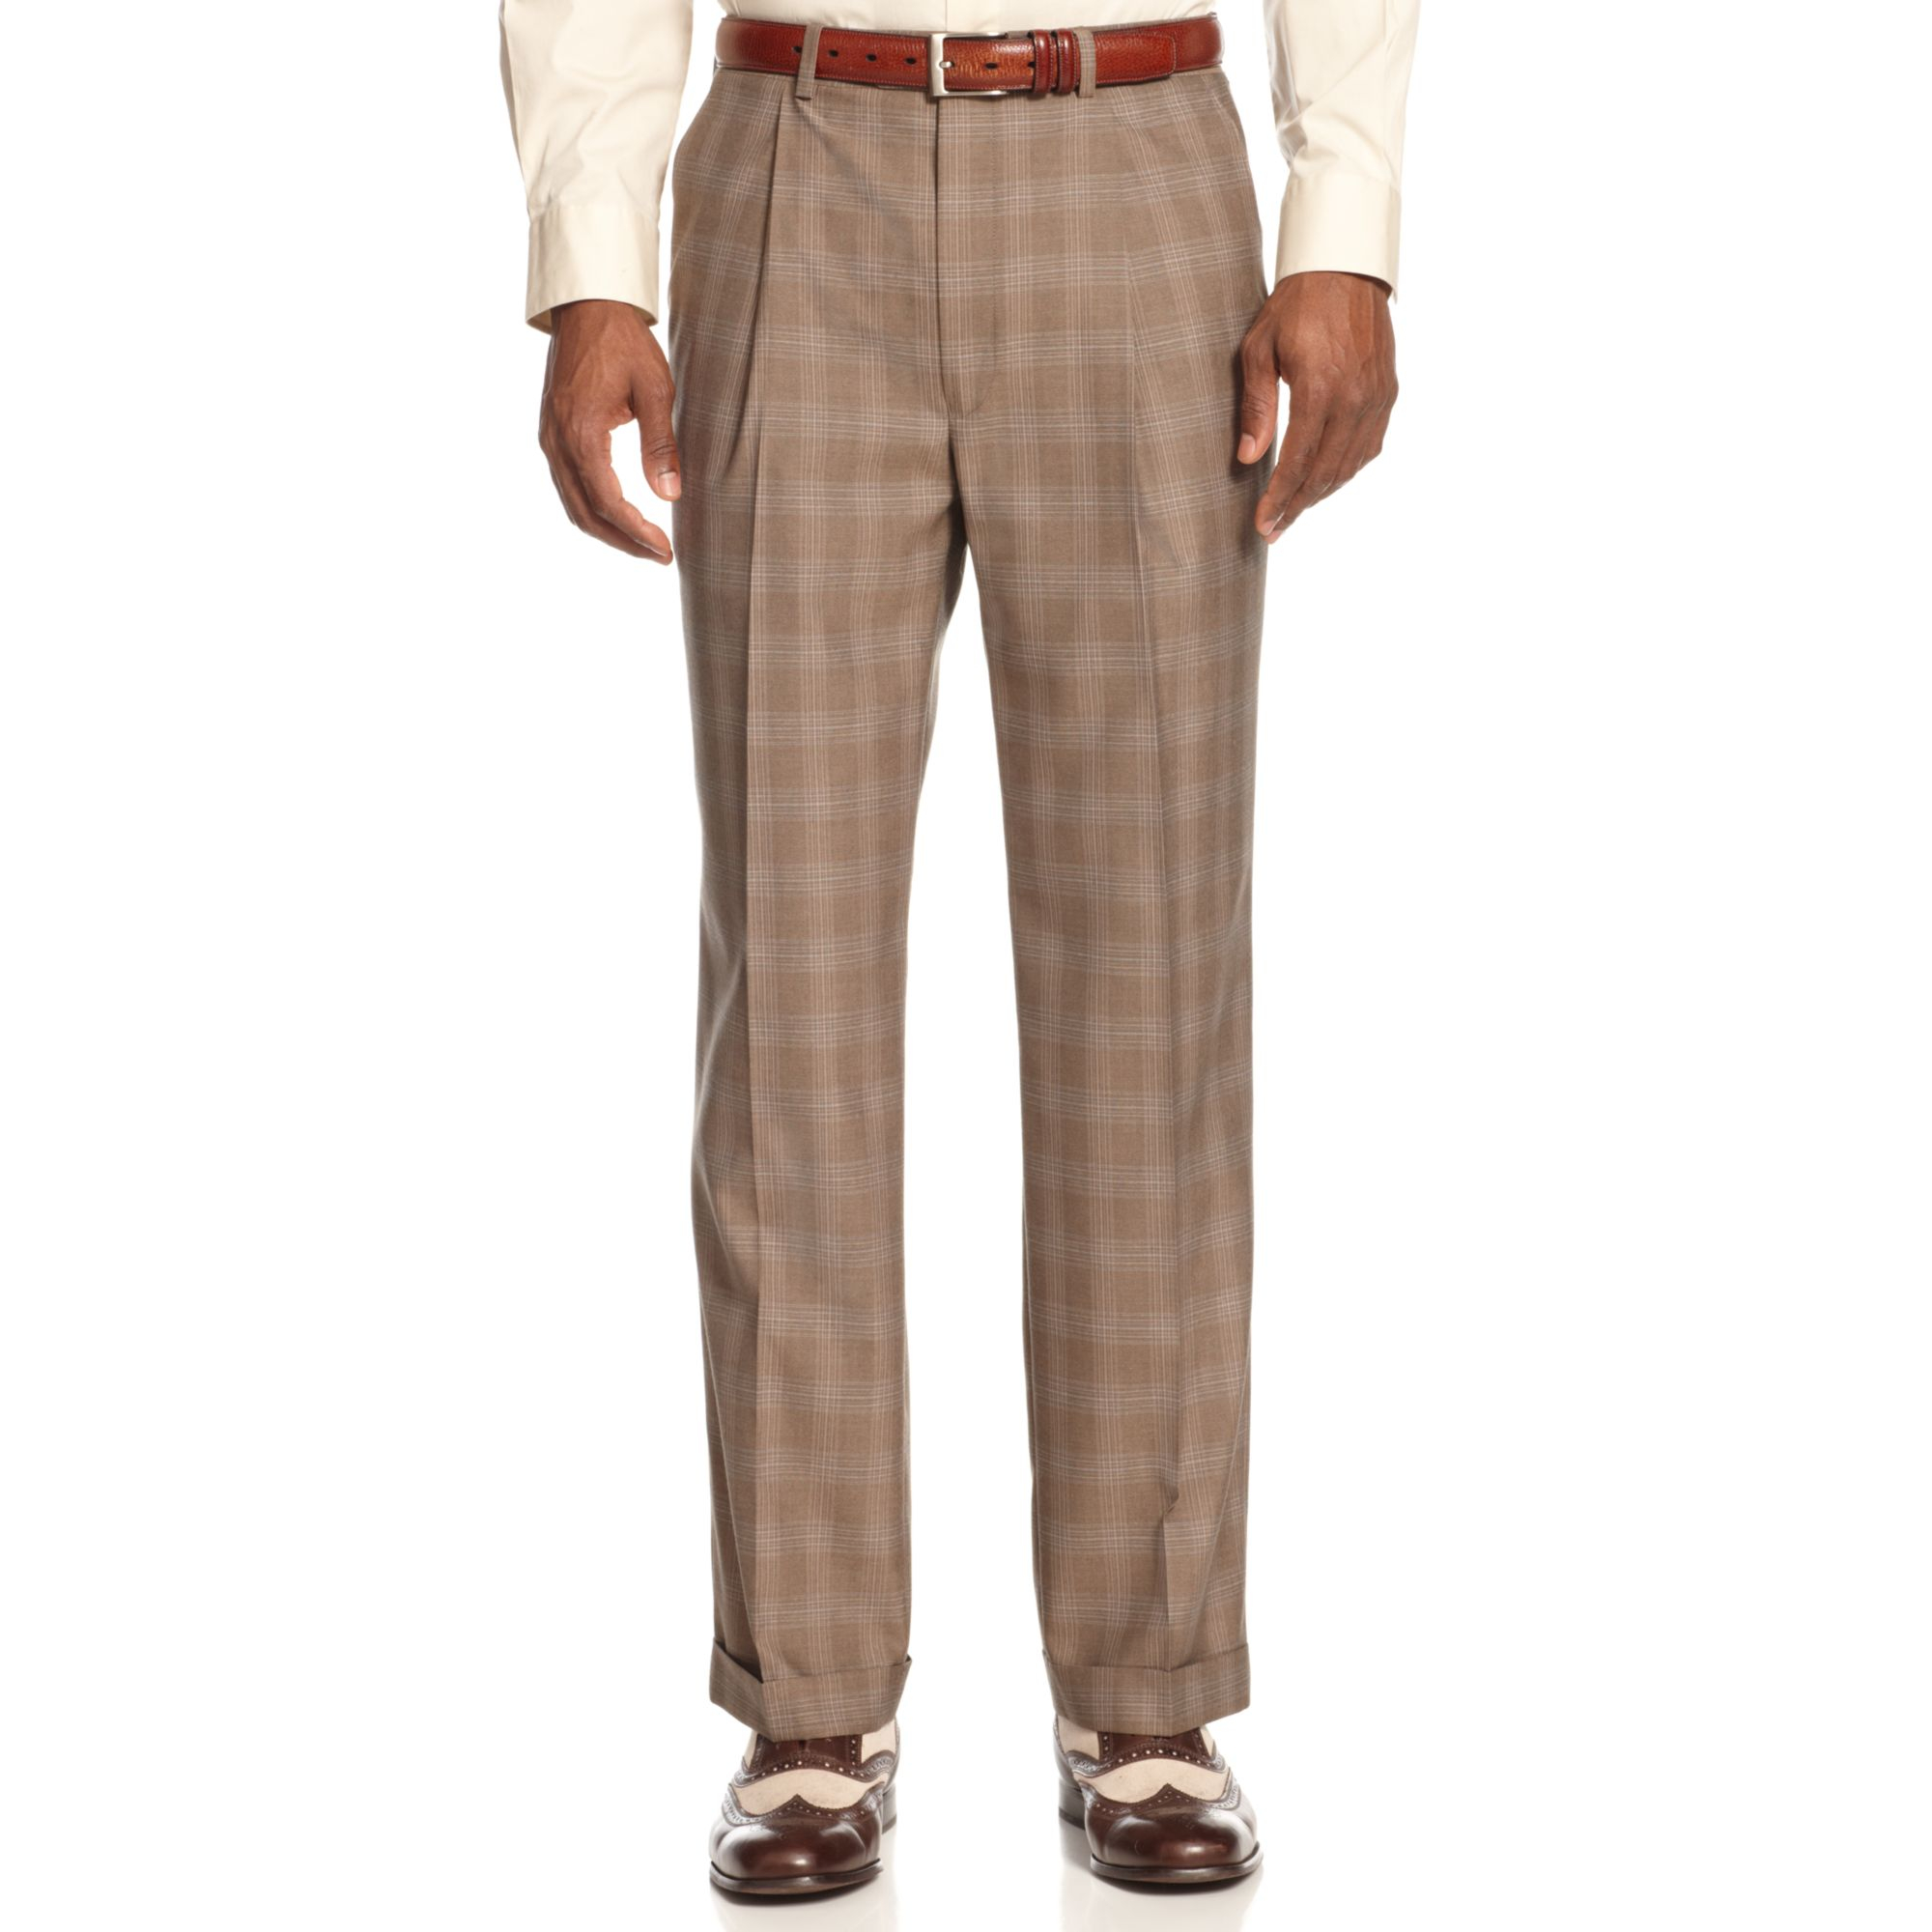 Details 83+ brown pants outfit men casual super hot - in.eteachers